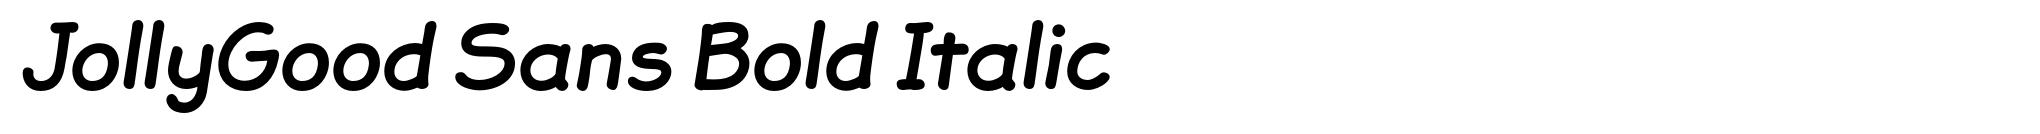 JollyGood Sans Bold Italic image